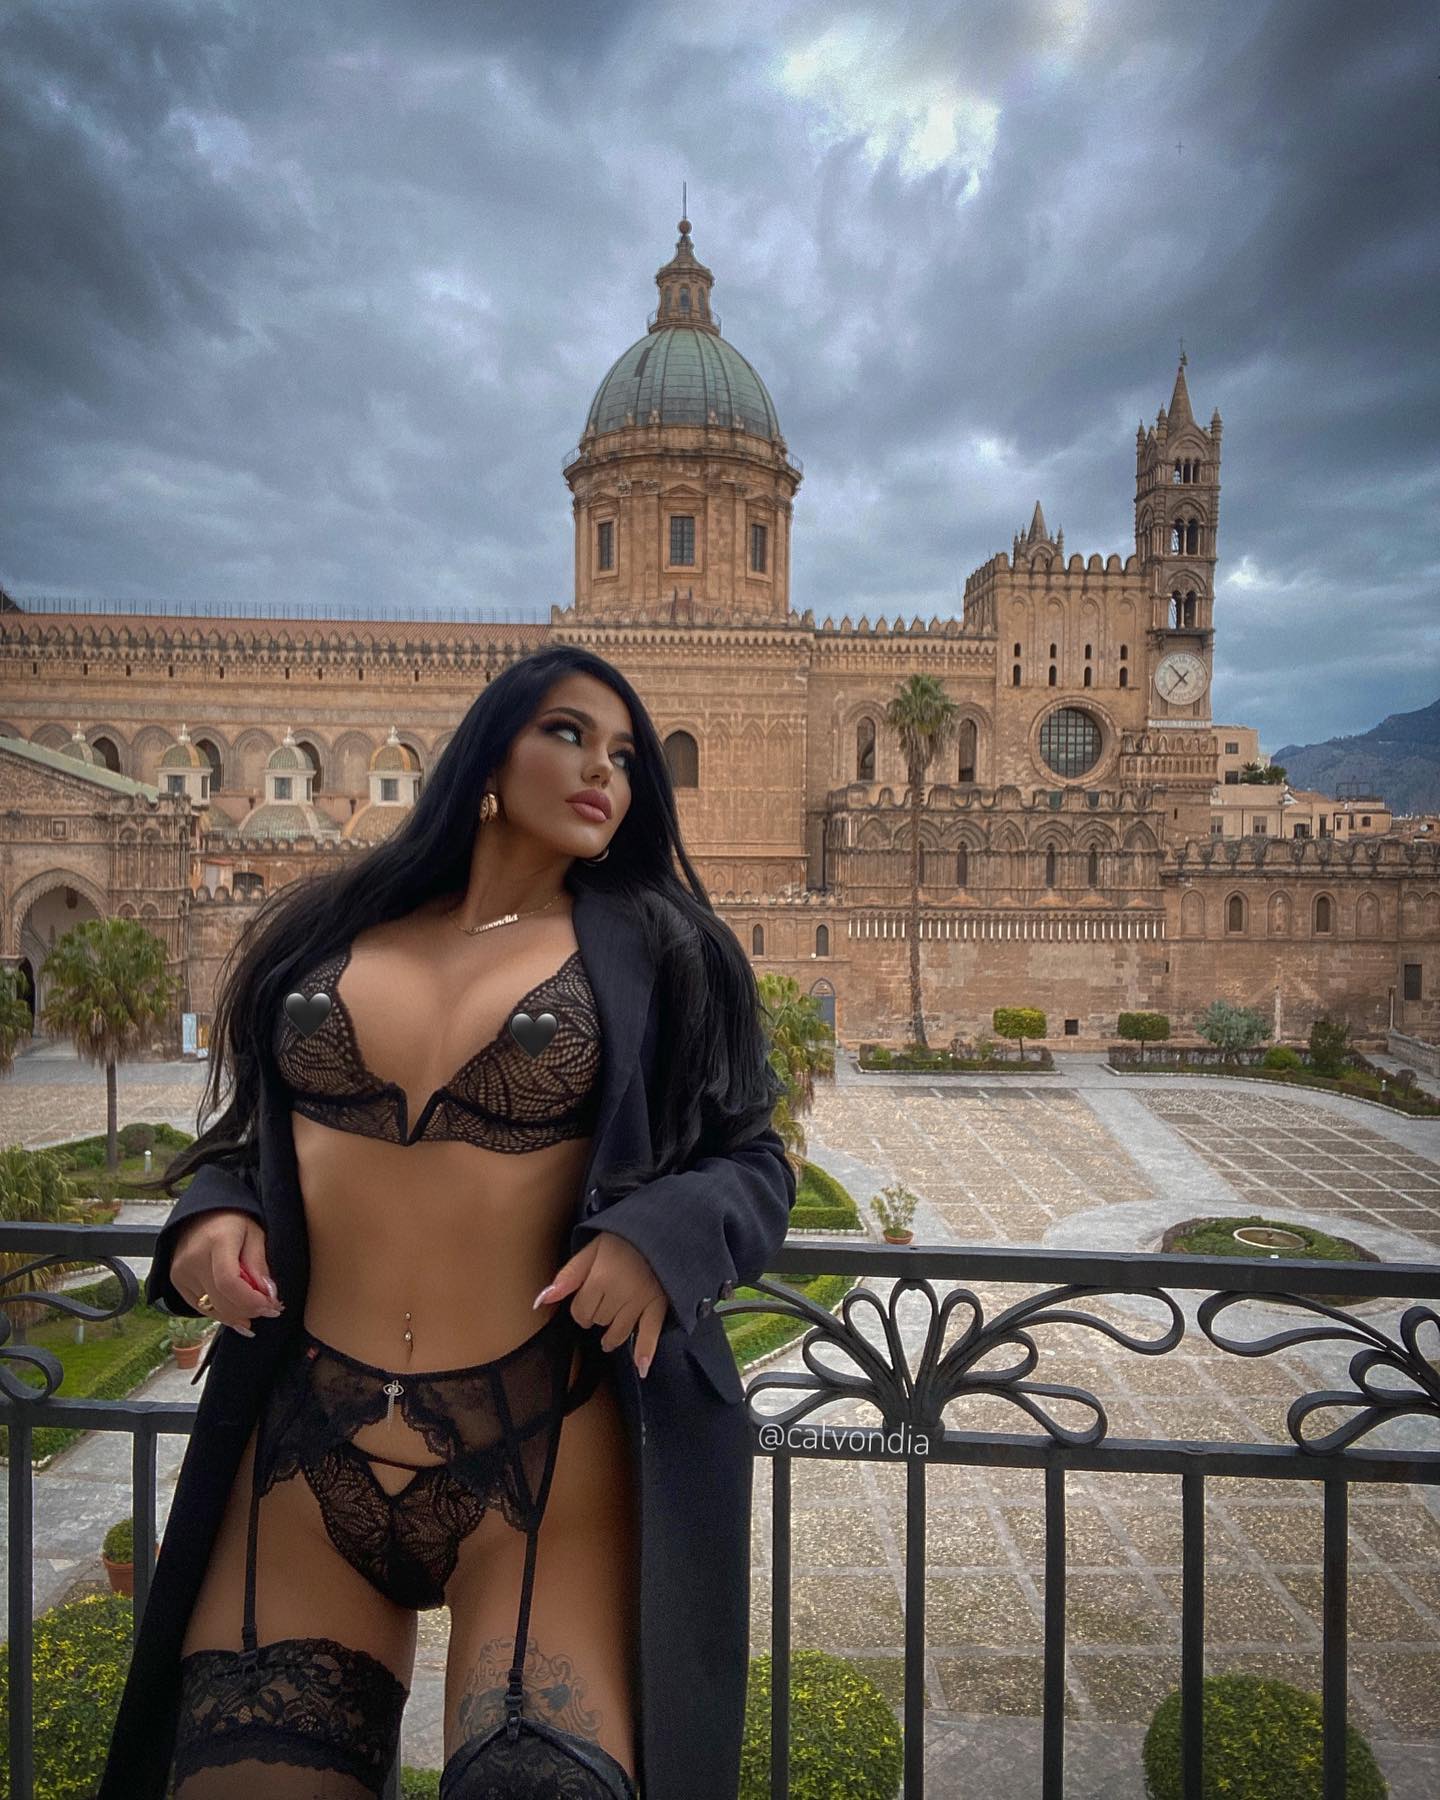 call me Donna Corleone🌹 | pic 1-5? 🎬
•
#palermo #sicily #thegodfather #mafia #ladyinblack #cattedraledipalermo #blacknylons #lingeriemodel #traveladdict #amazingviews